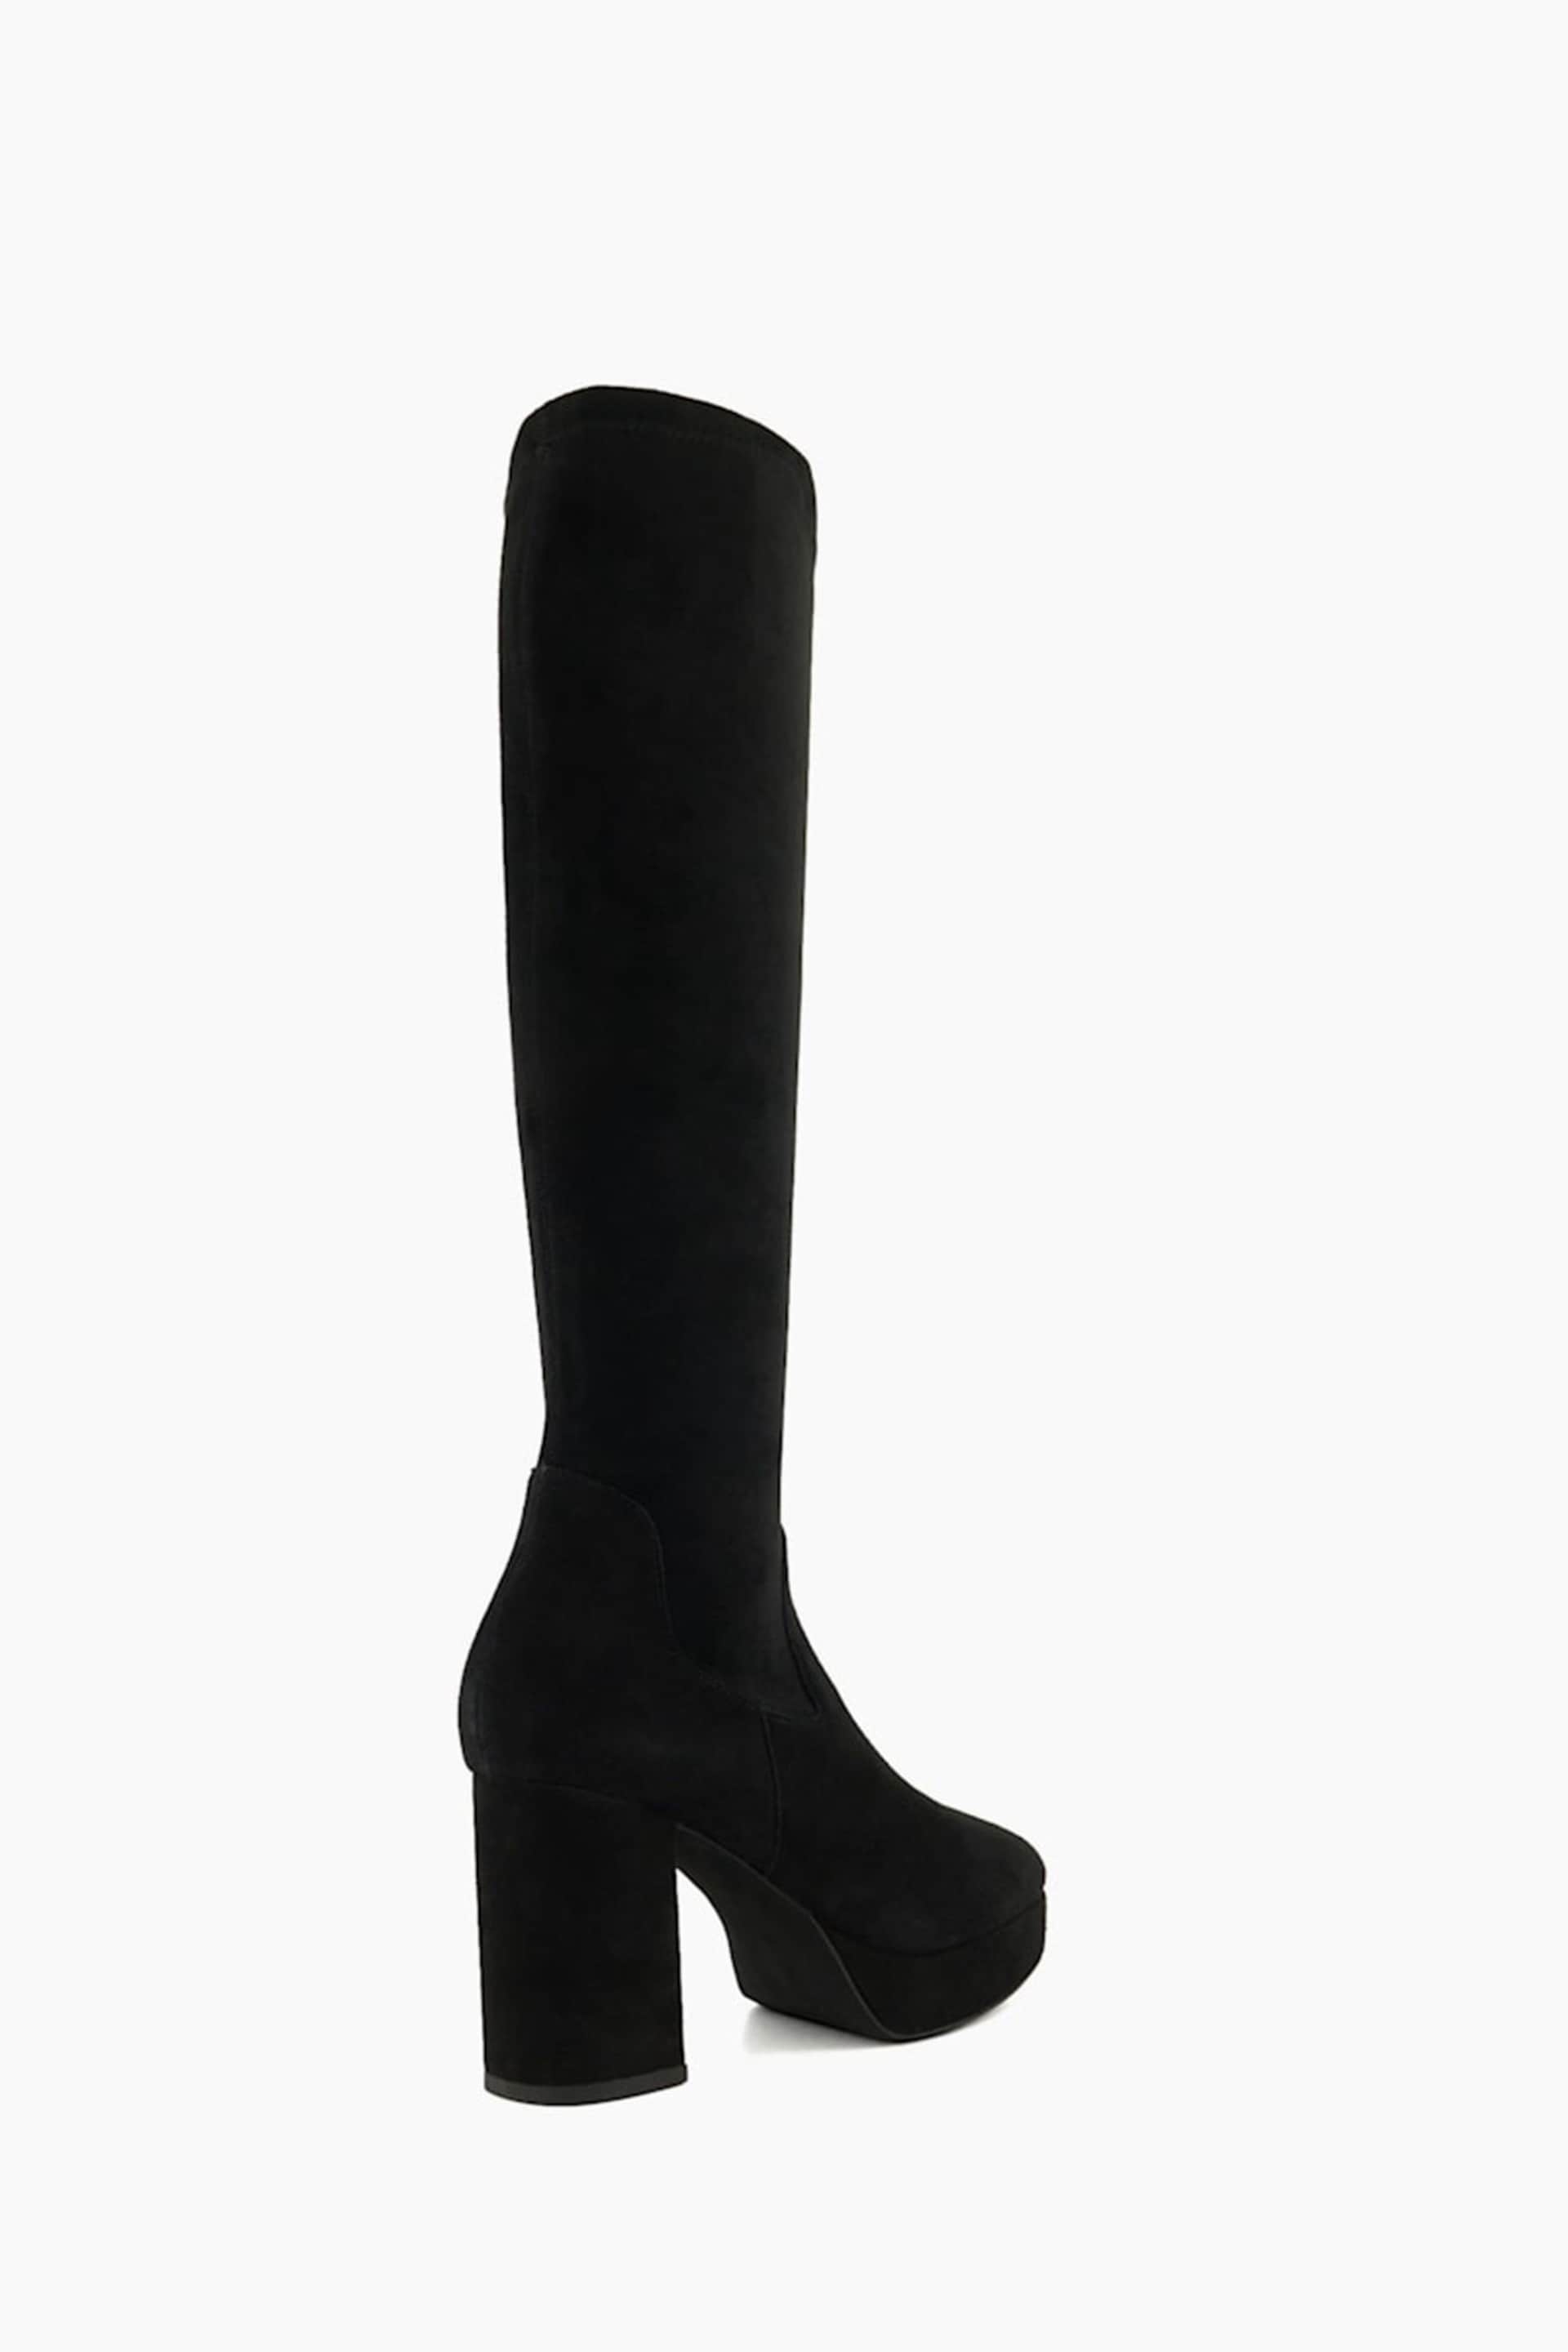 Dune London Black Sassy Stretch Platform Knee-High Boots - Image 3 of 5